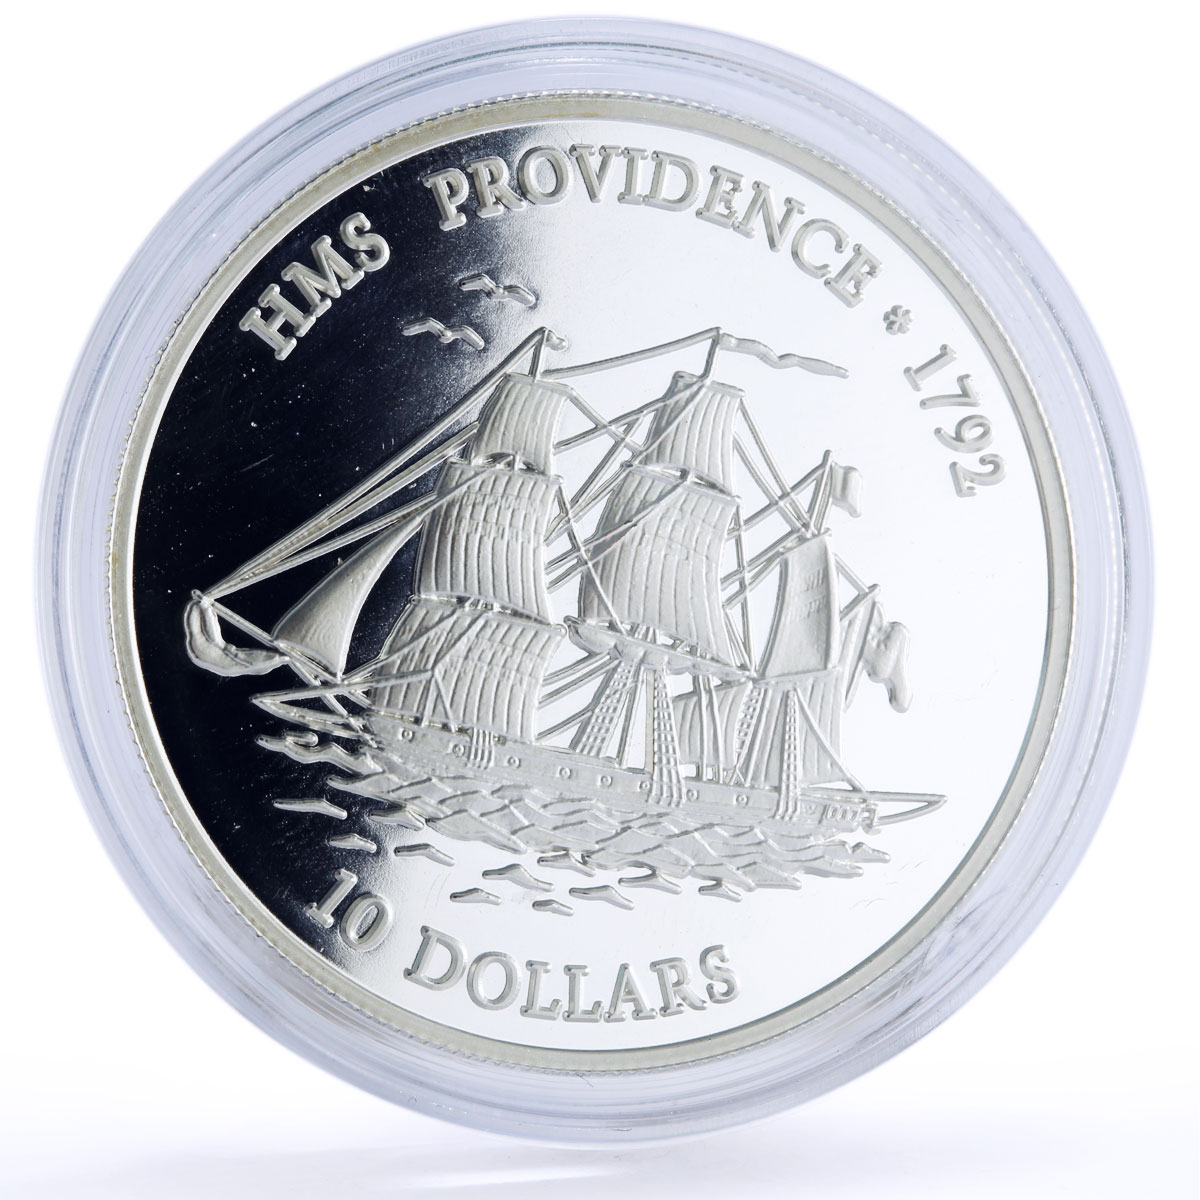 Fiji 10 dollars Seafaring HMS Providence Ship Clipper proof silver coin 2001